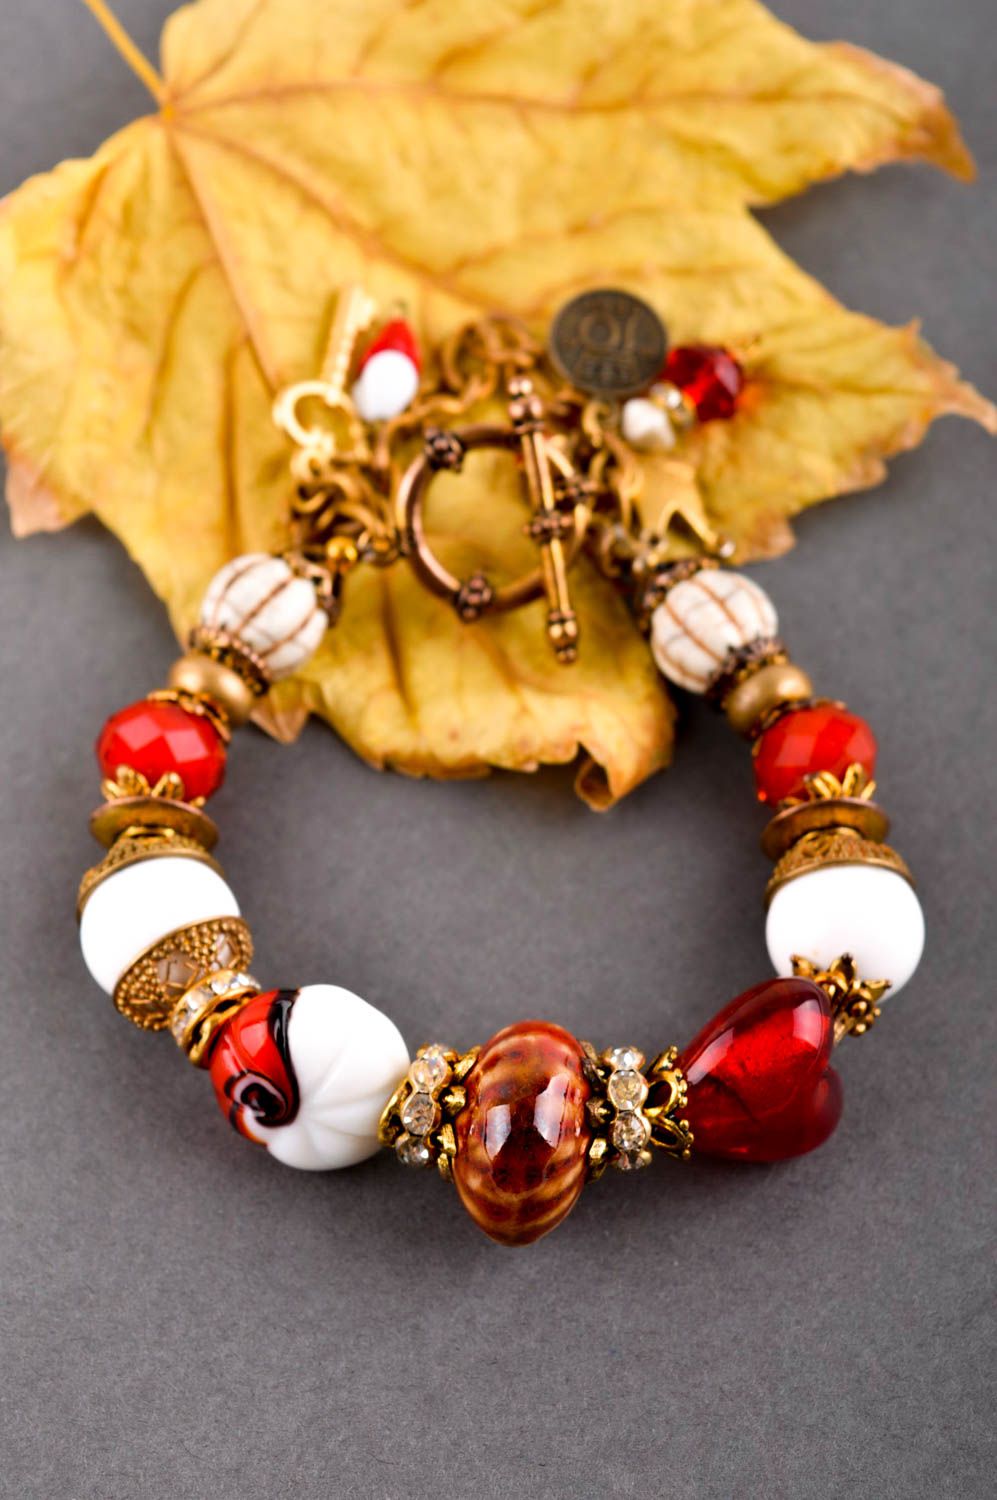 Handmade bracelet with natural stones jewelry stones stylish fashion jewelry photo 1